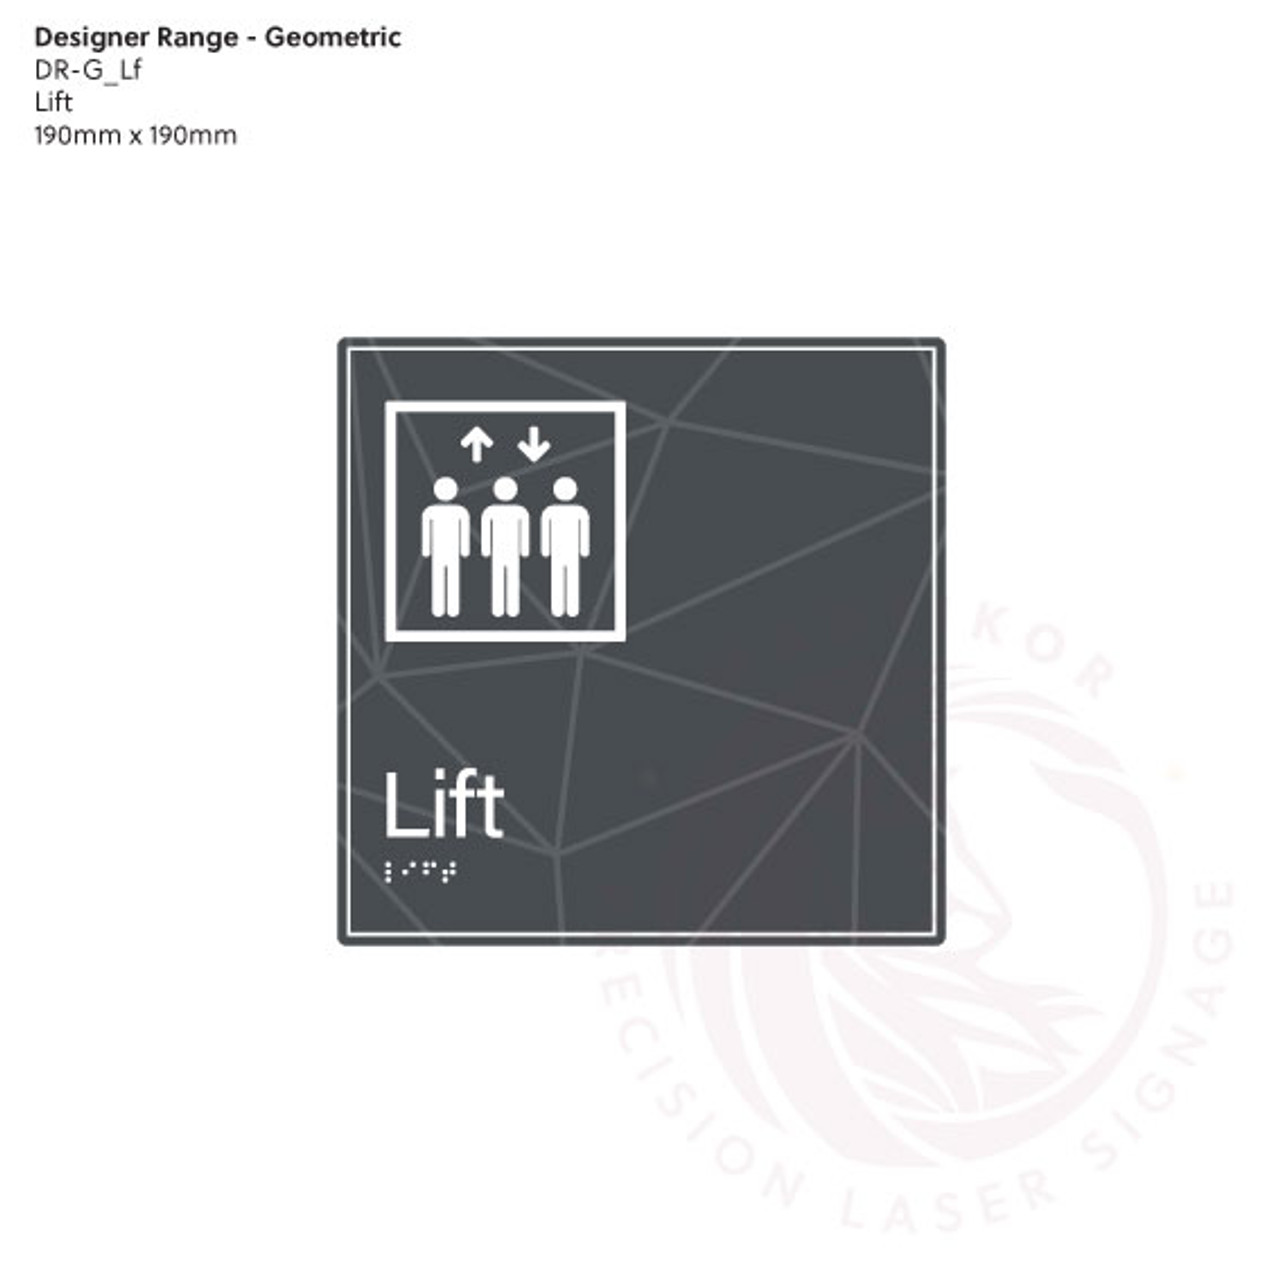 Geometric Designer Range - Lift